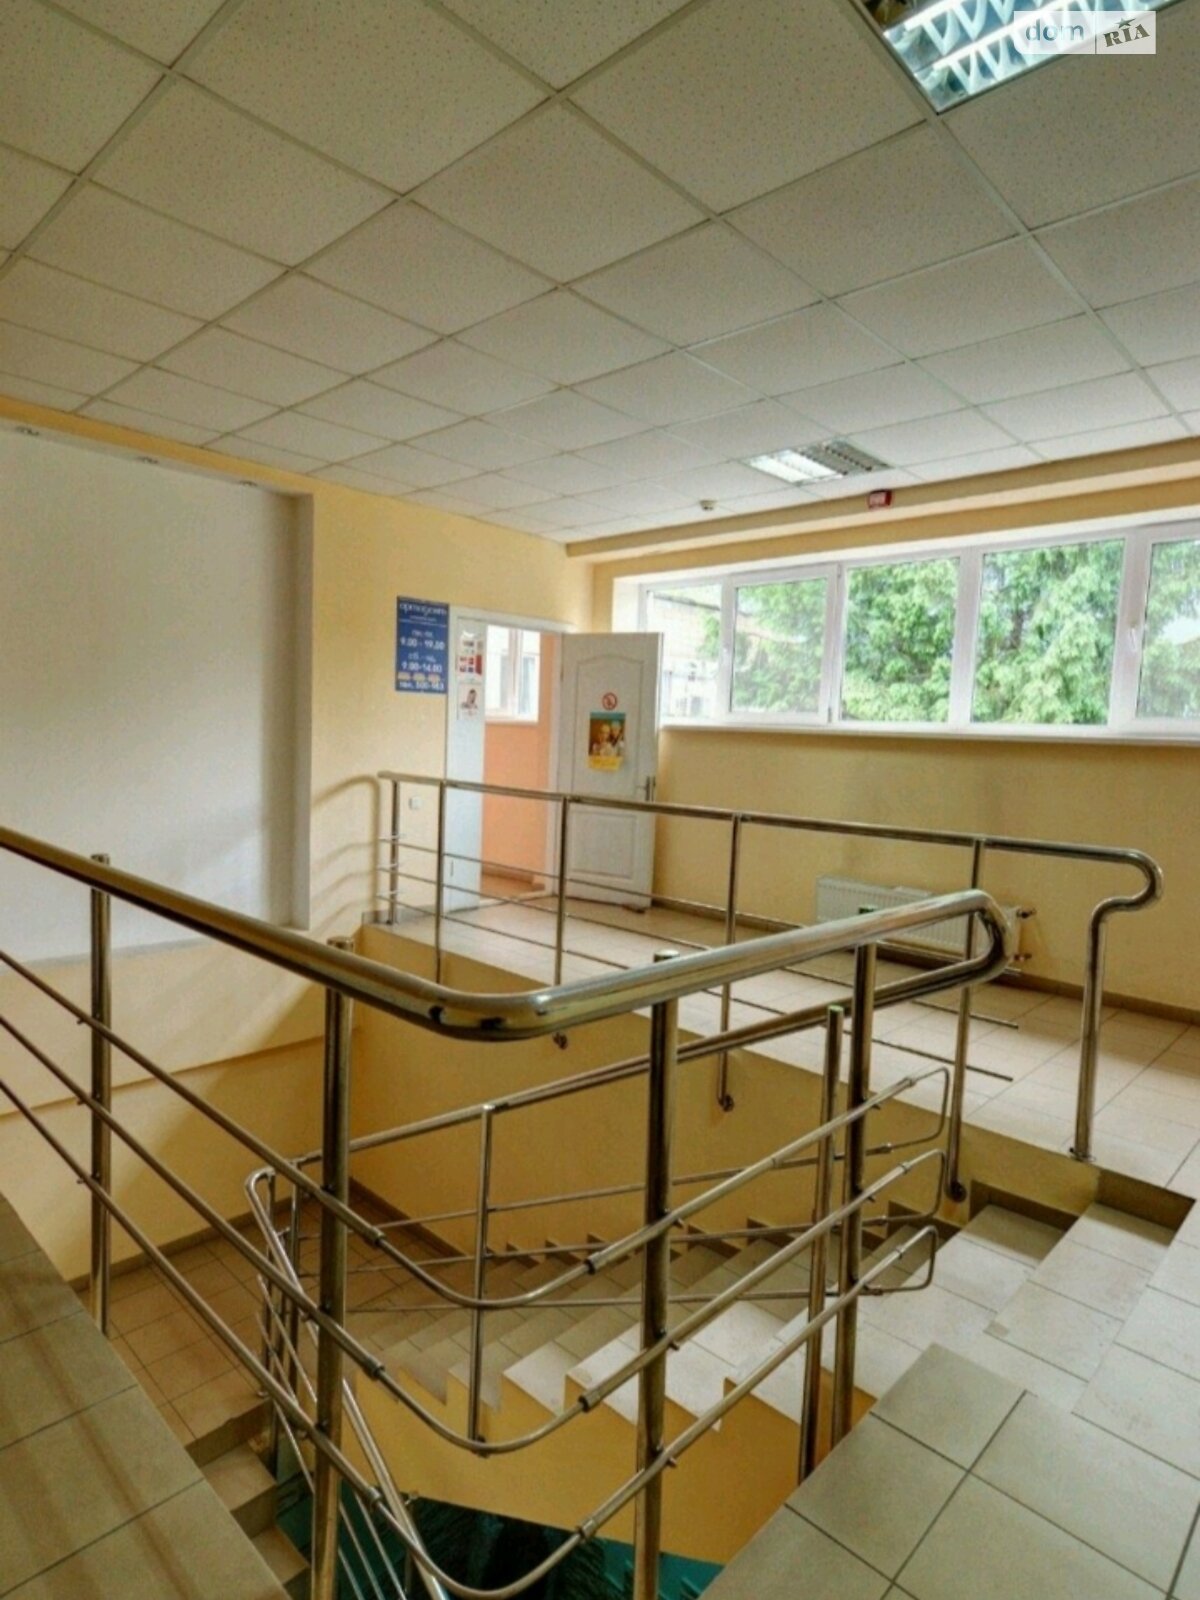 Аренда офисного помещения в Черкассах, Кішки Самійли, помещений - 1, этаж - 2 фото 1